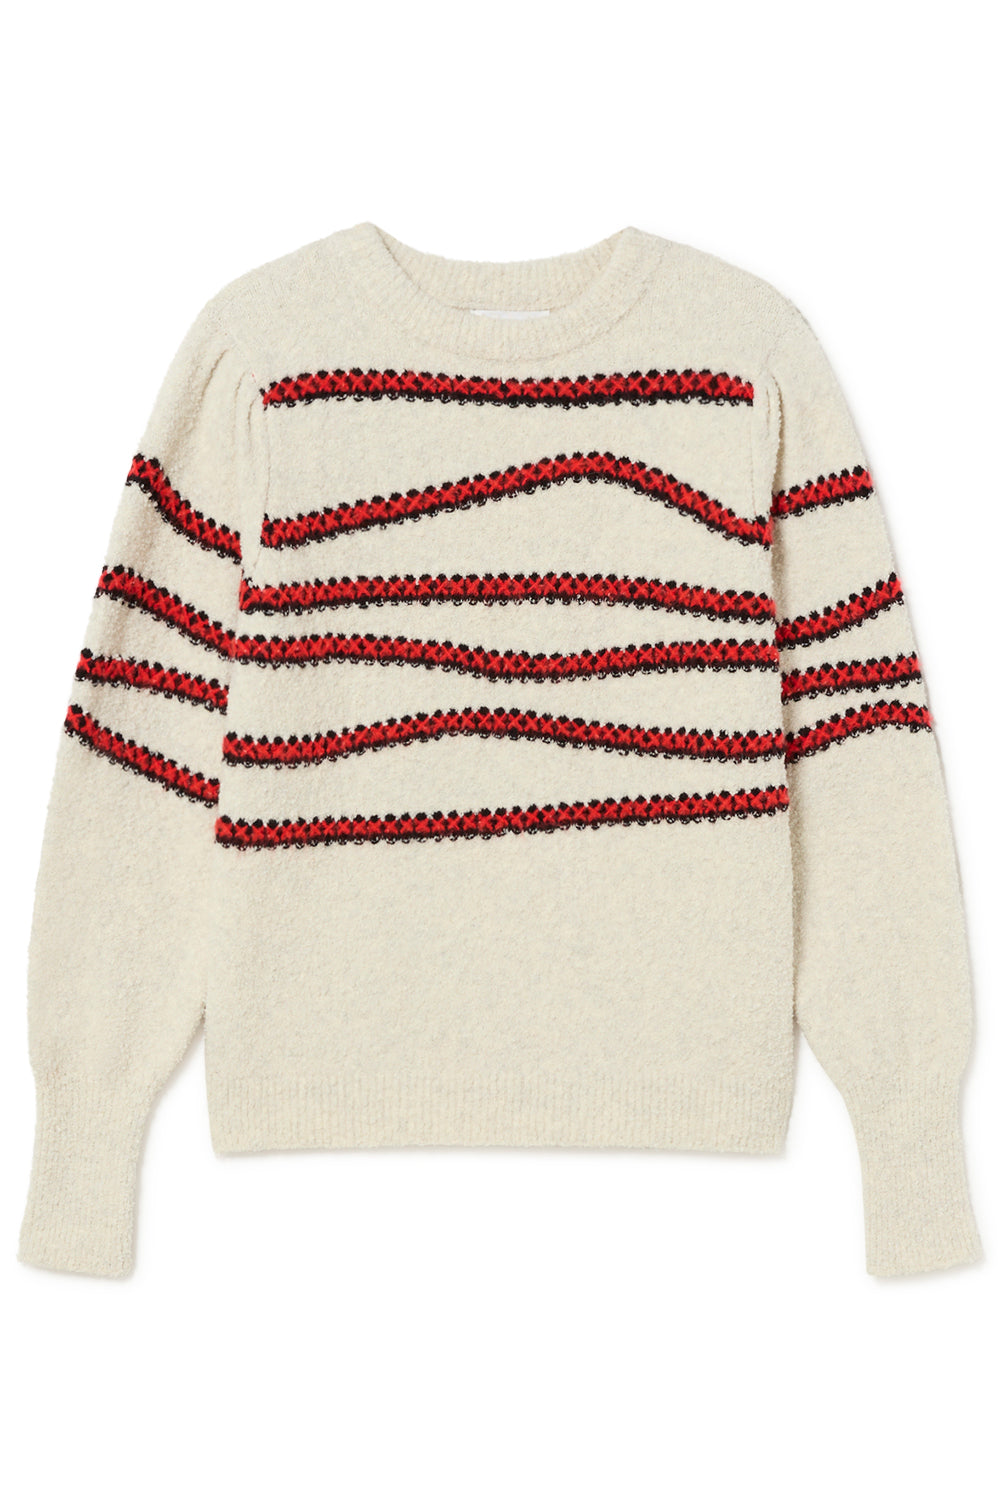 Wavy Striped sweater